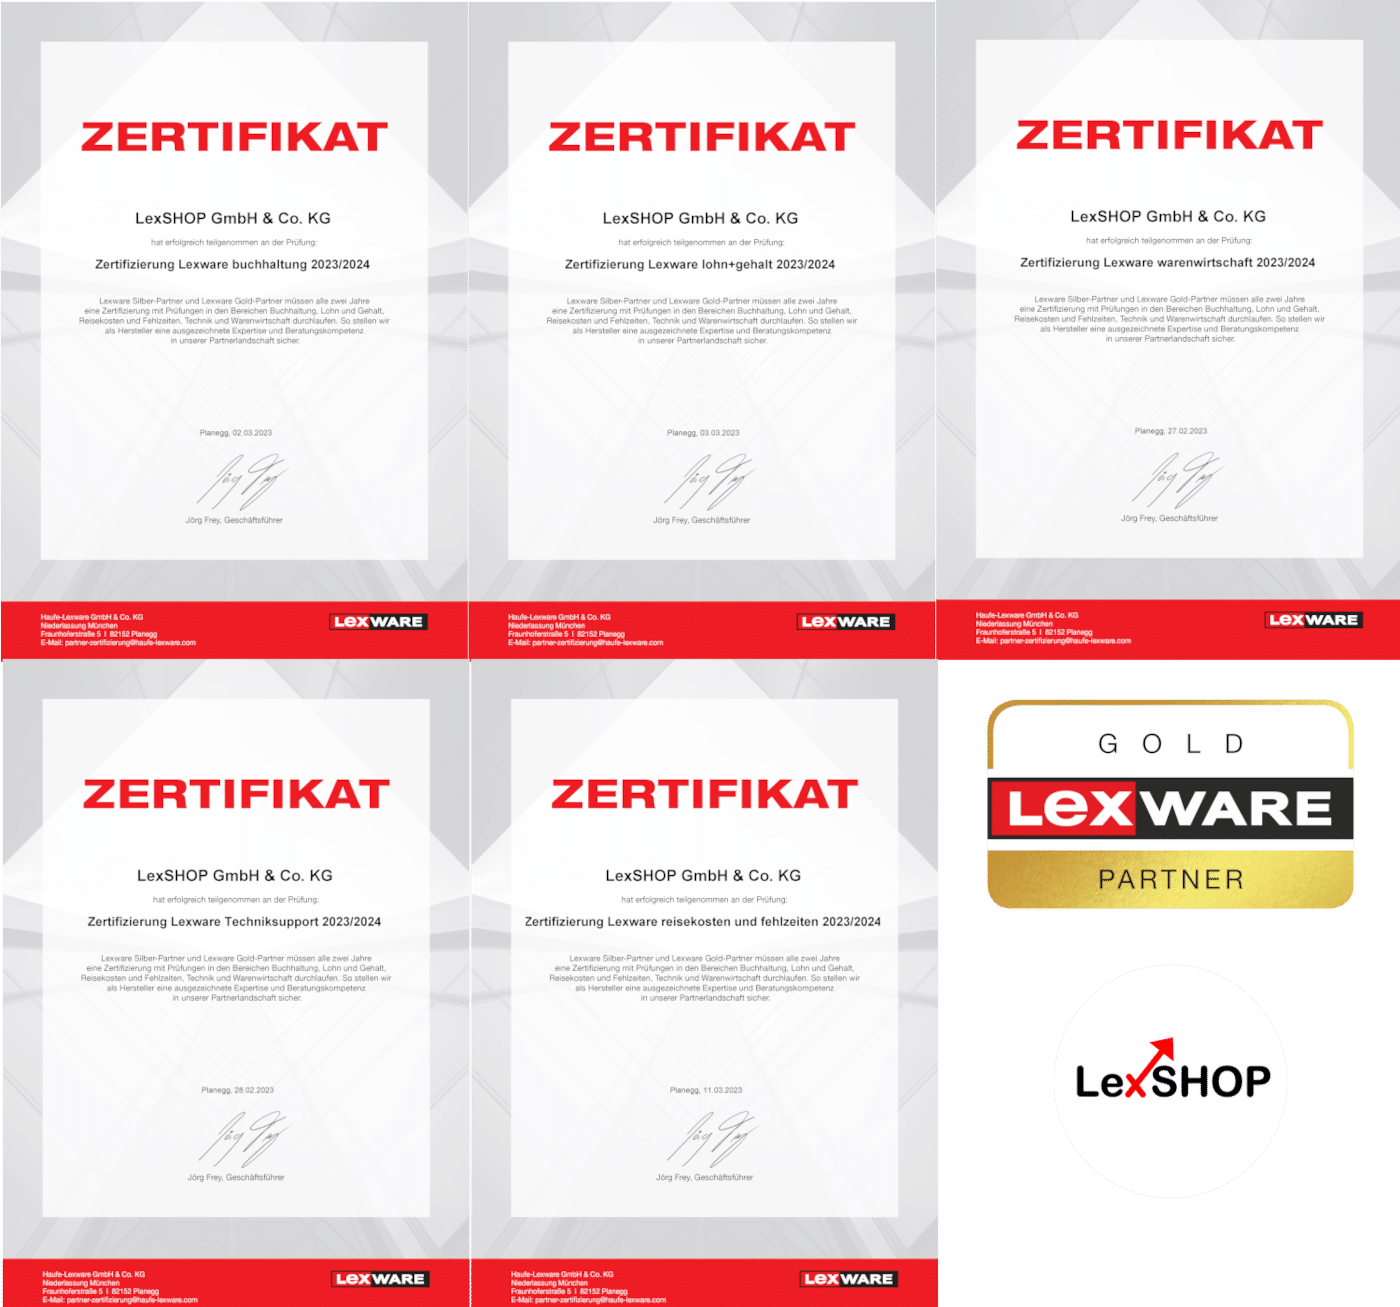 Lexware-Zertifikate-2023